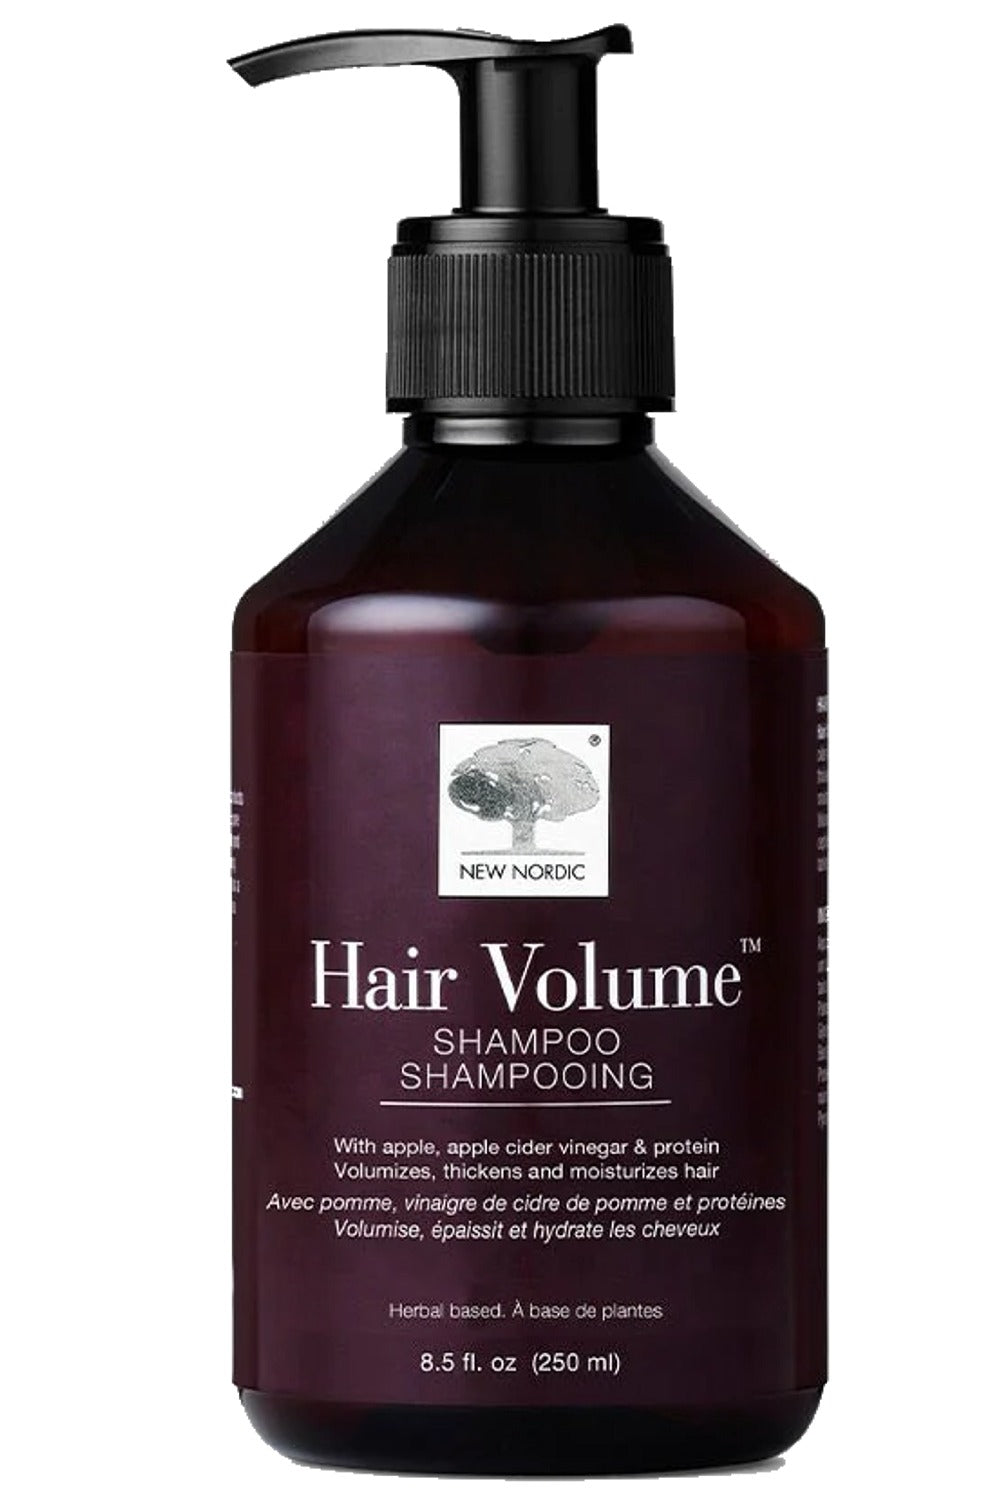 NEW NORDIC Hair Volume Shampoo (250 ml)